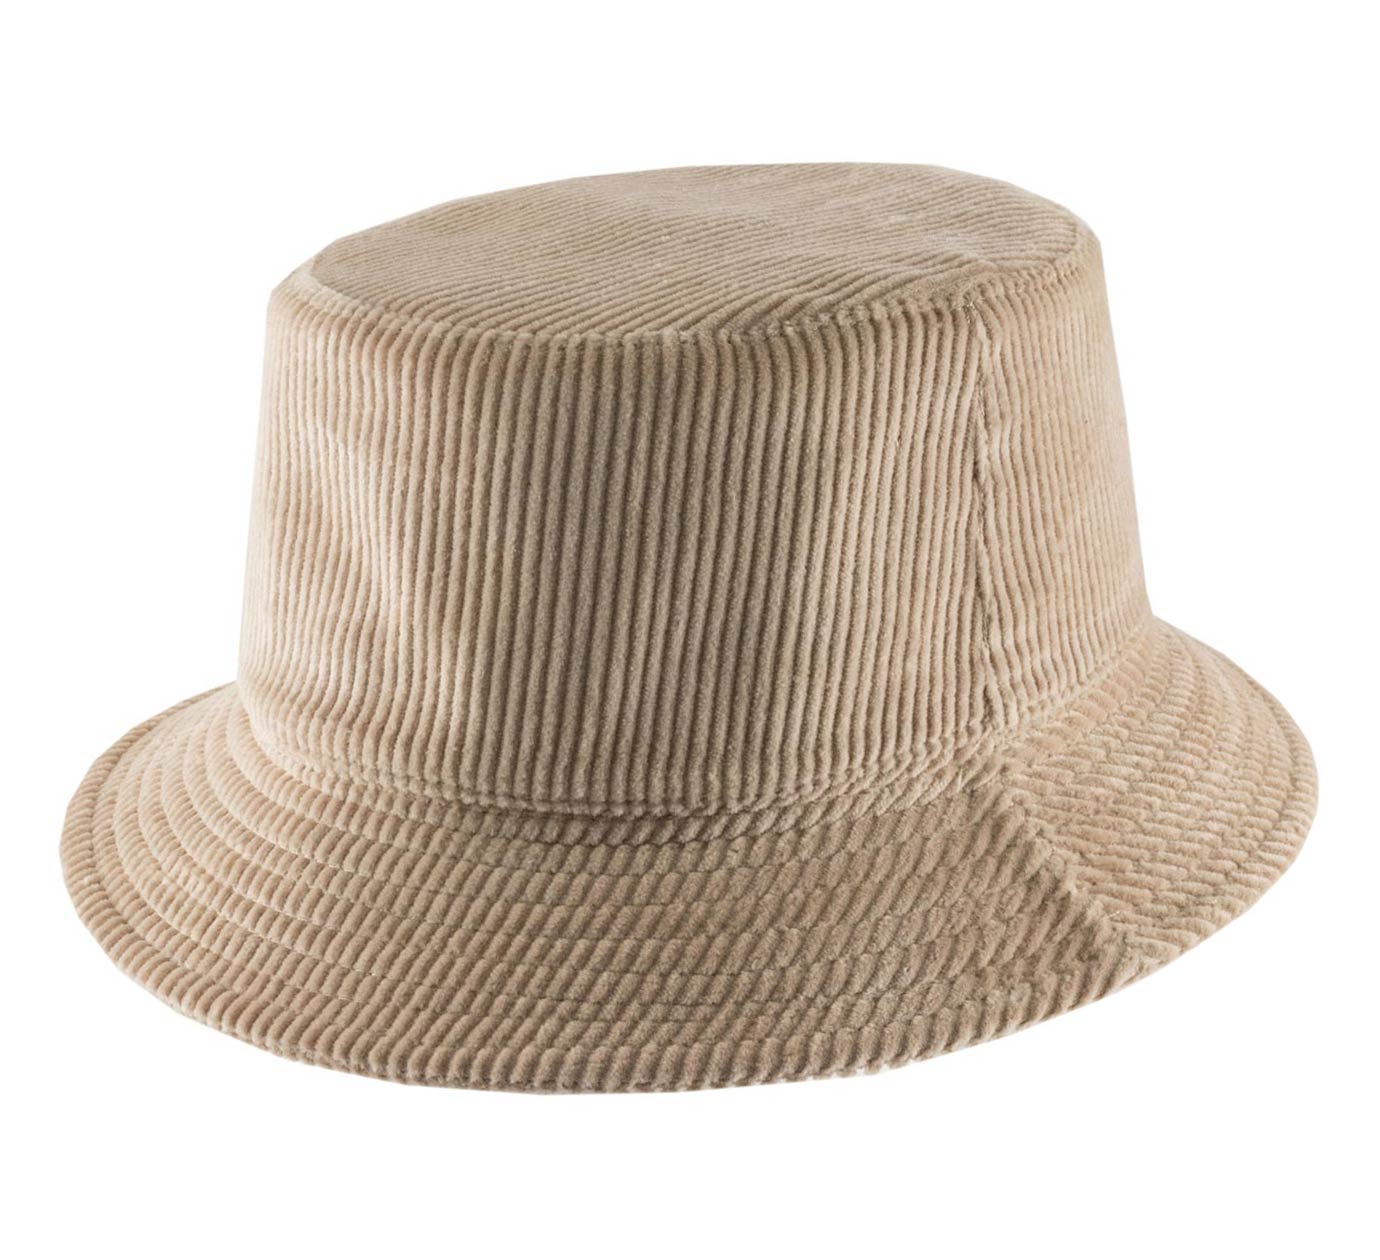 Wholesale Winter Hats - vintage velvet bucket hat